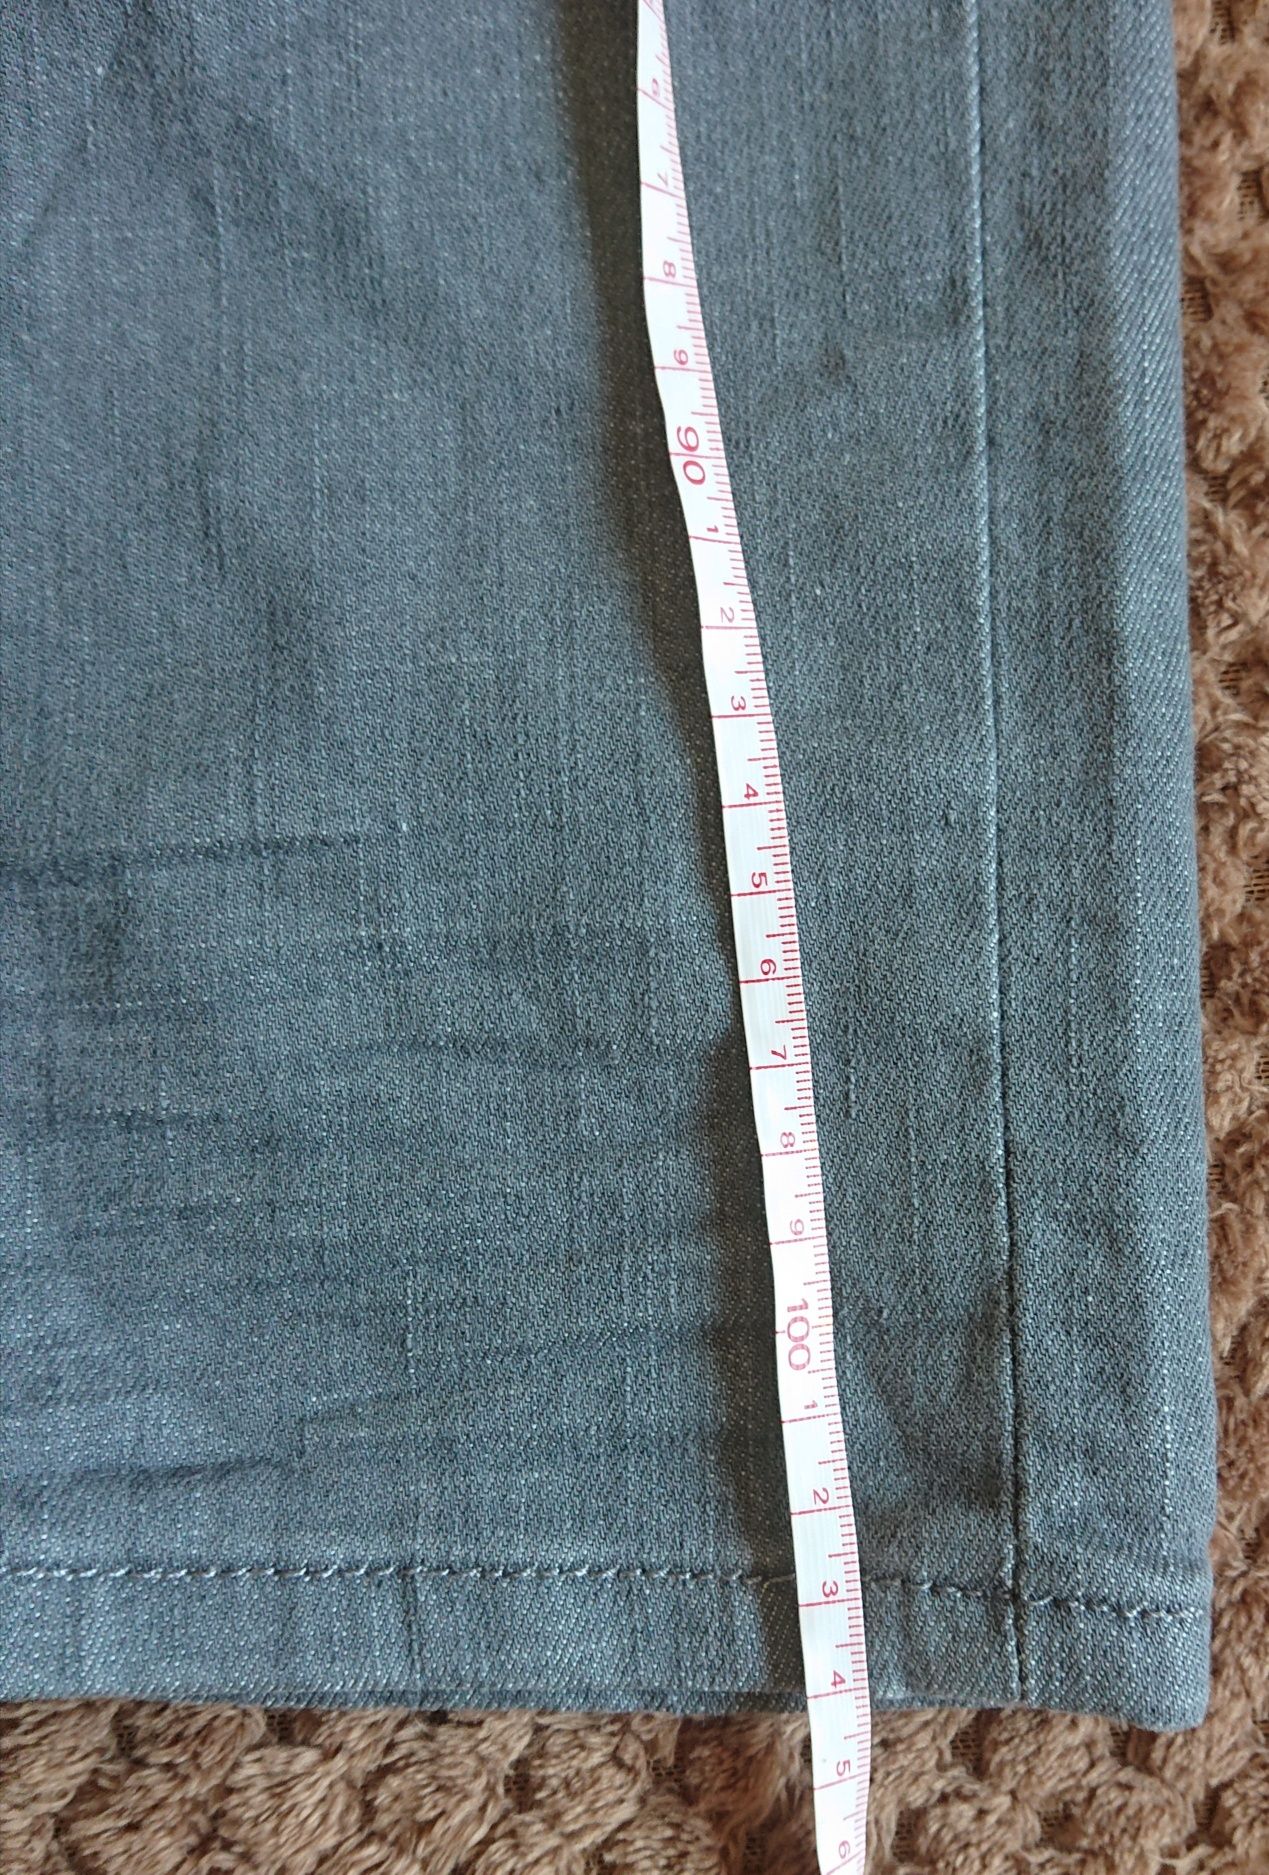 Blugi - Jeans ONLY & SONS - Slim Fit - Marimea S 31/32